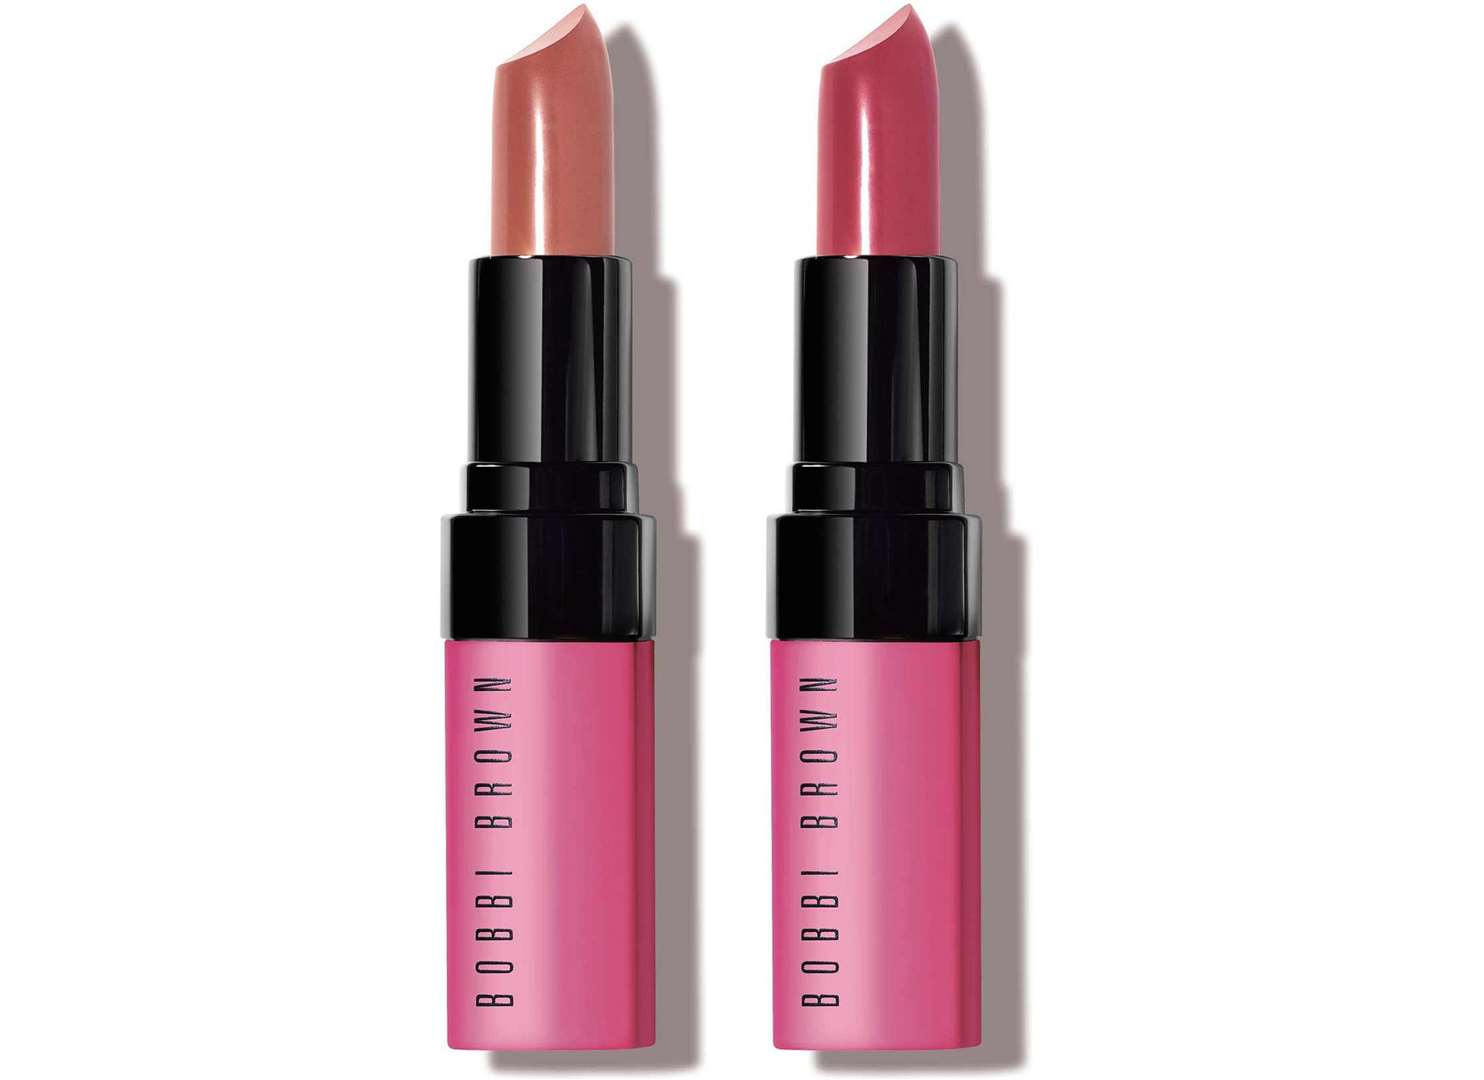 Bobbi Brown Pinks with Purpose Lip Colour Duo